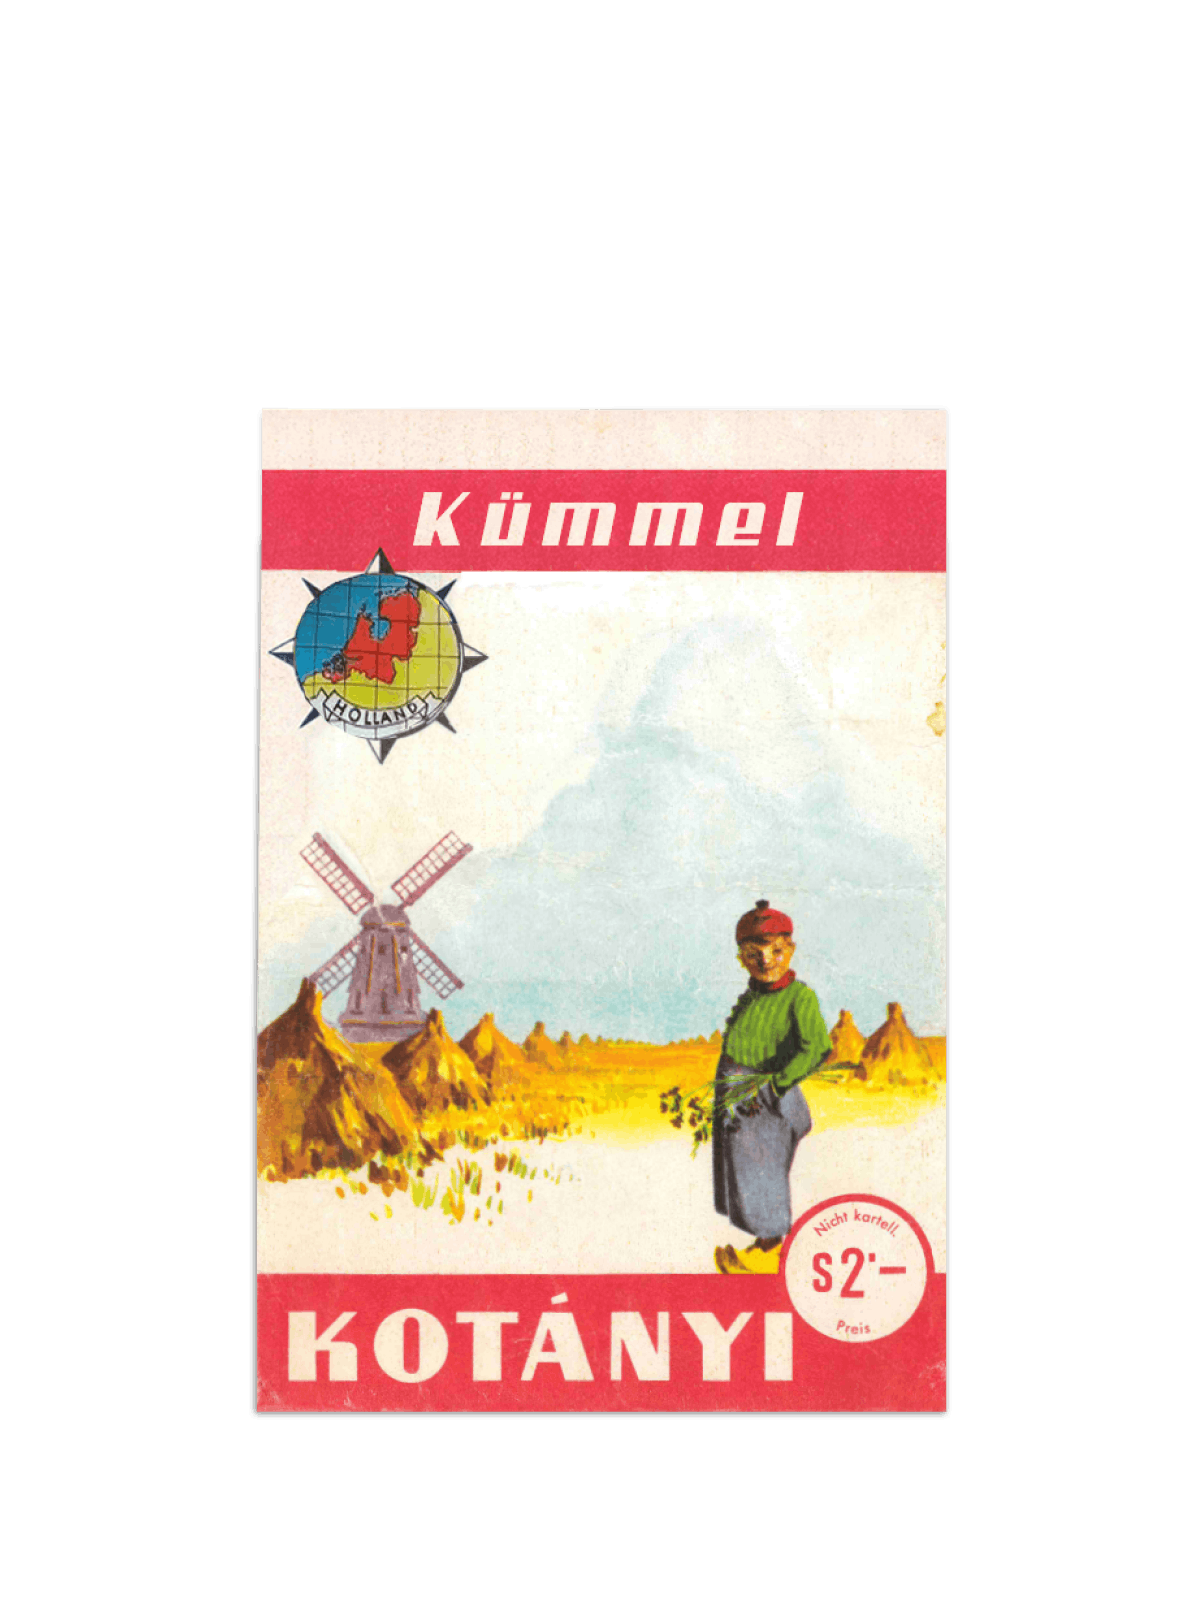 A Kotányi caraway sachet from 1961.